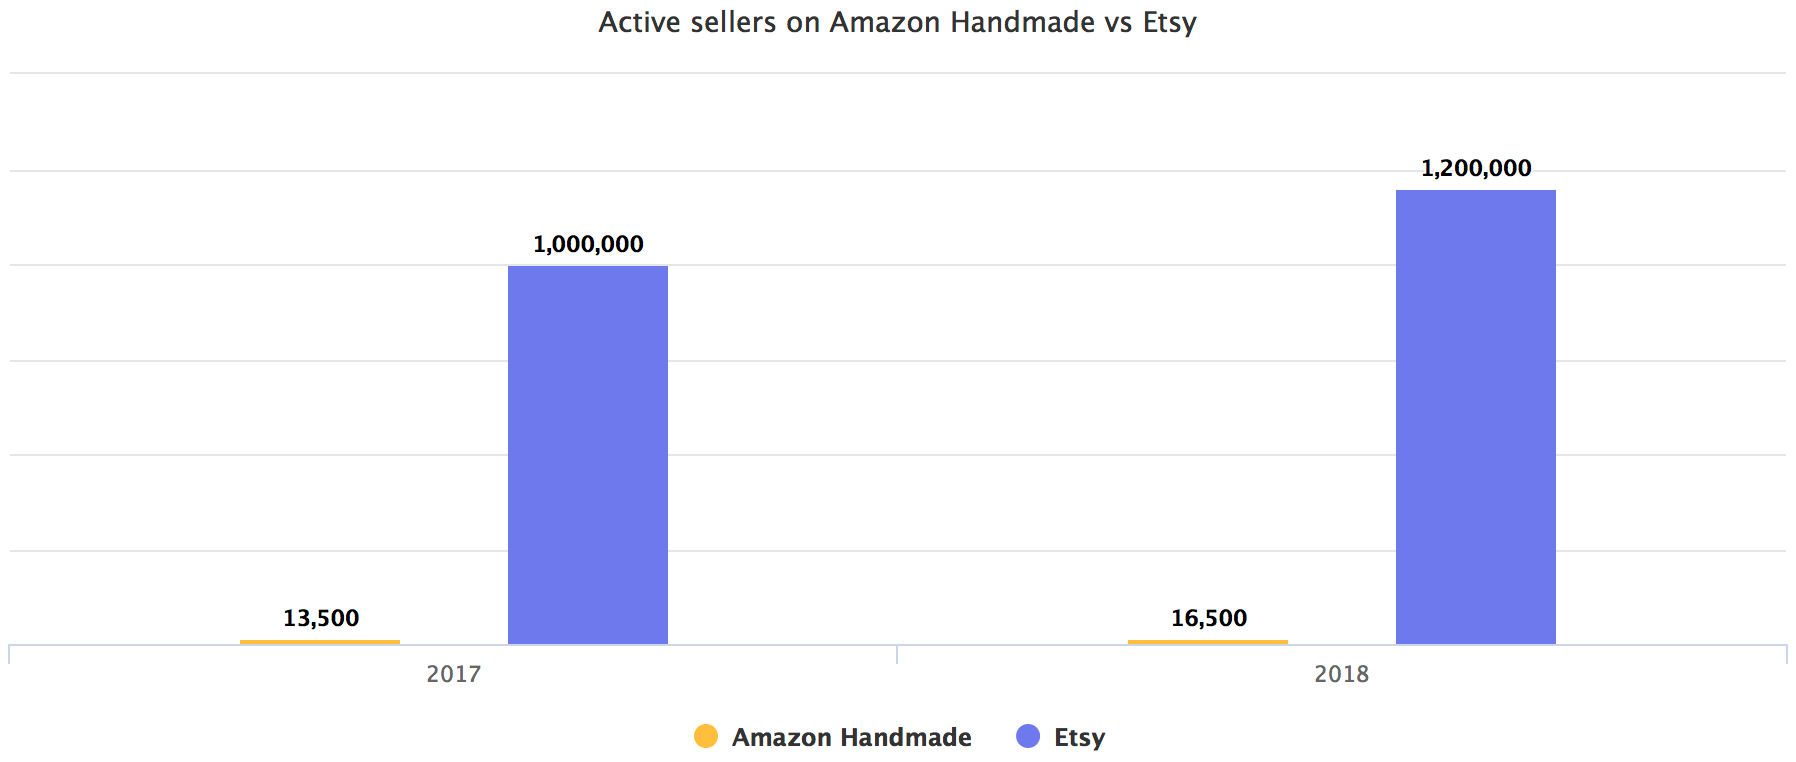 Active sellers on Amazon Handmade vs Etsy